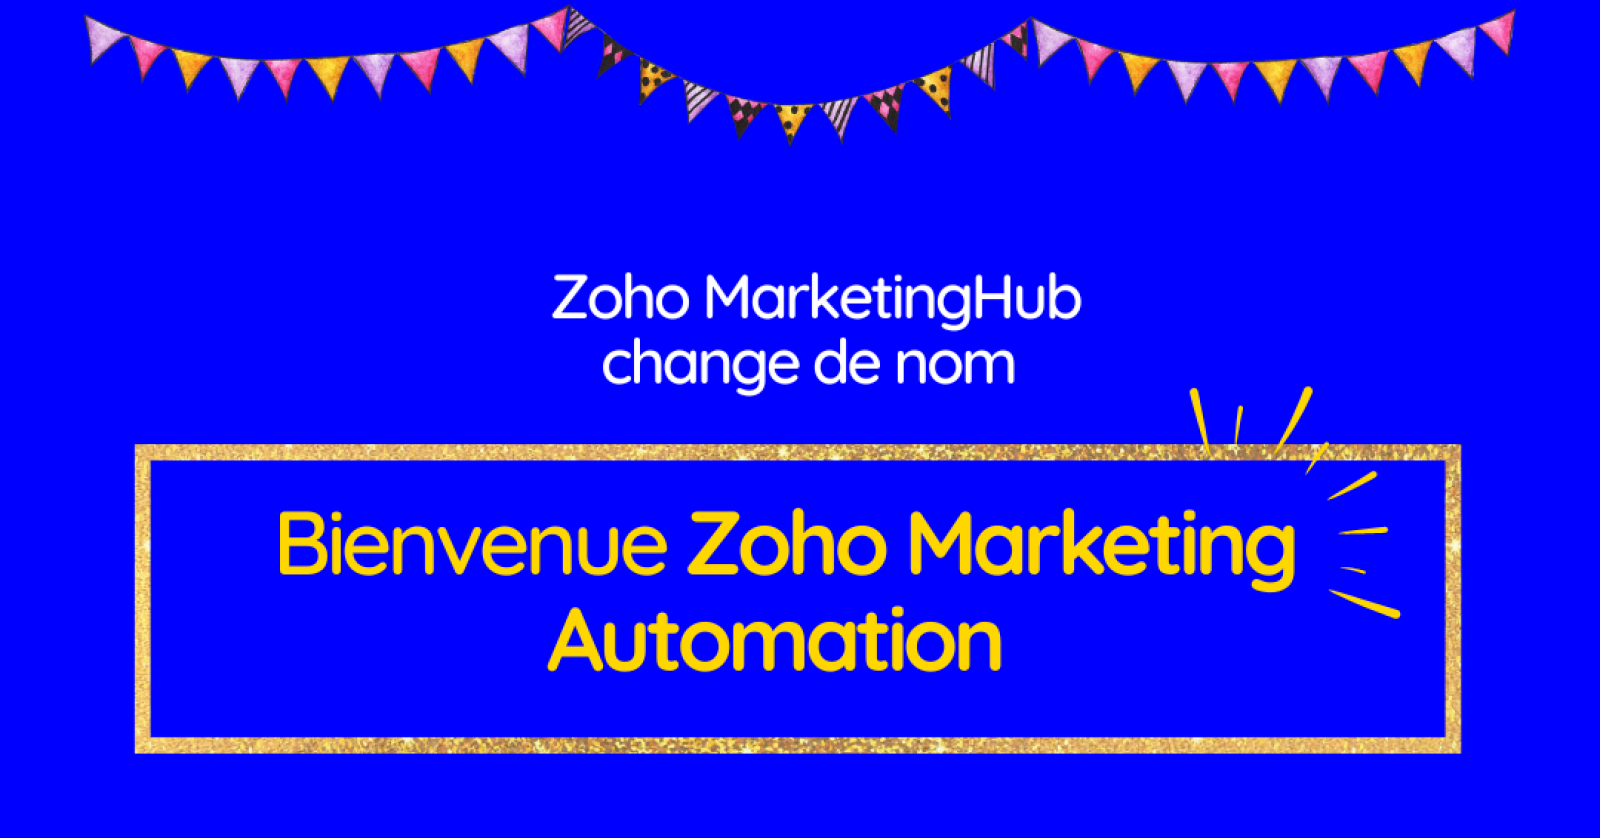 Zoho MarketingHub devient Zoho Marketing Automation